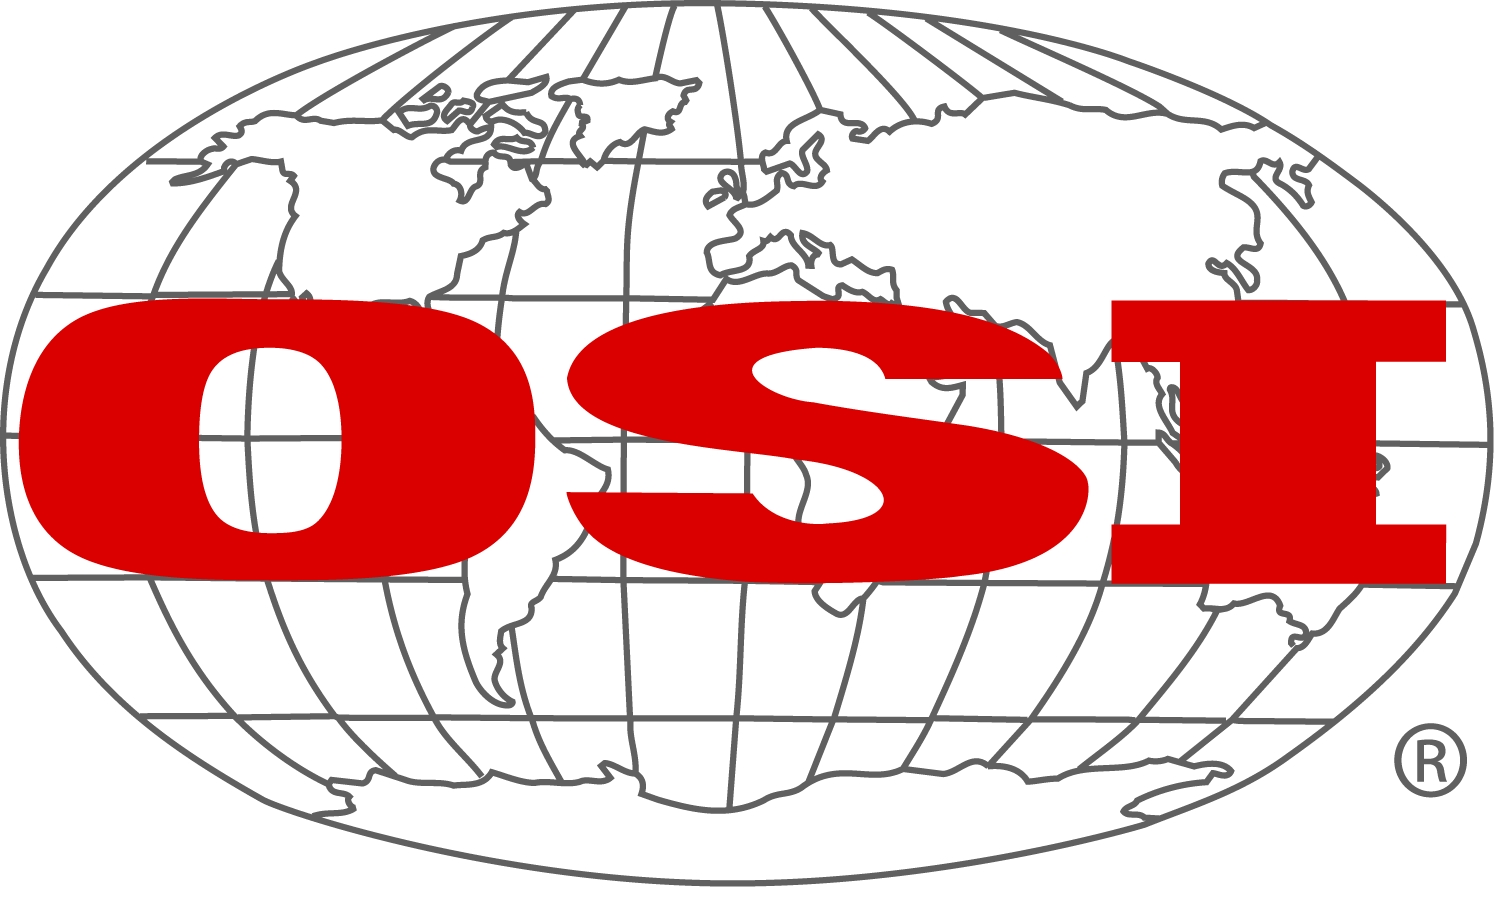 OSI Group logo